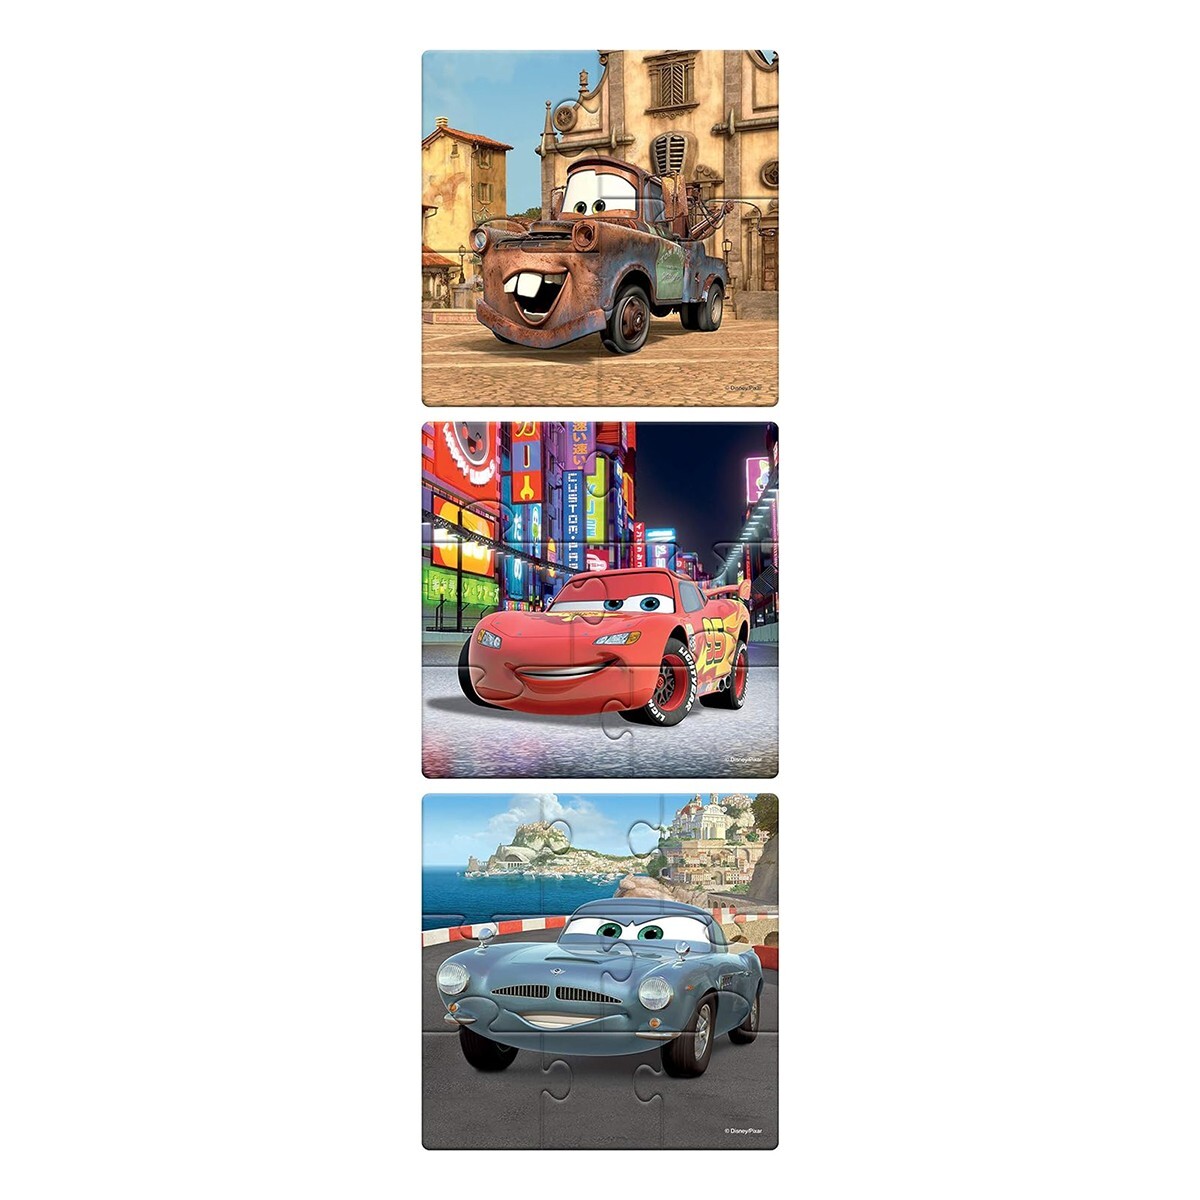 Frank Disney First Puzzlees Car-13704